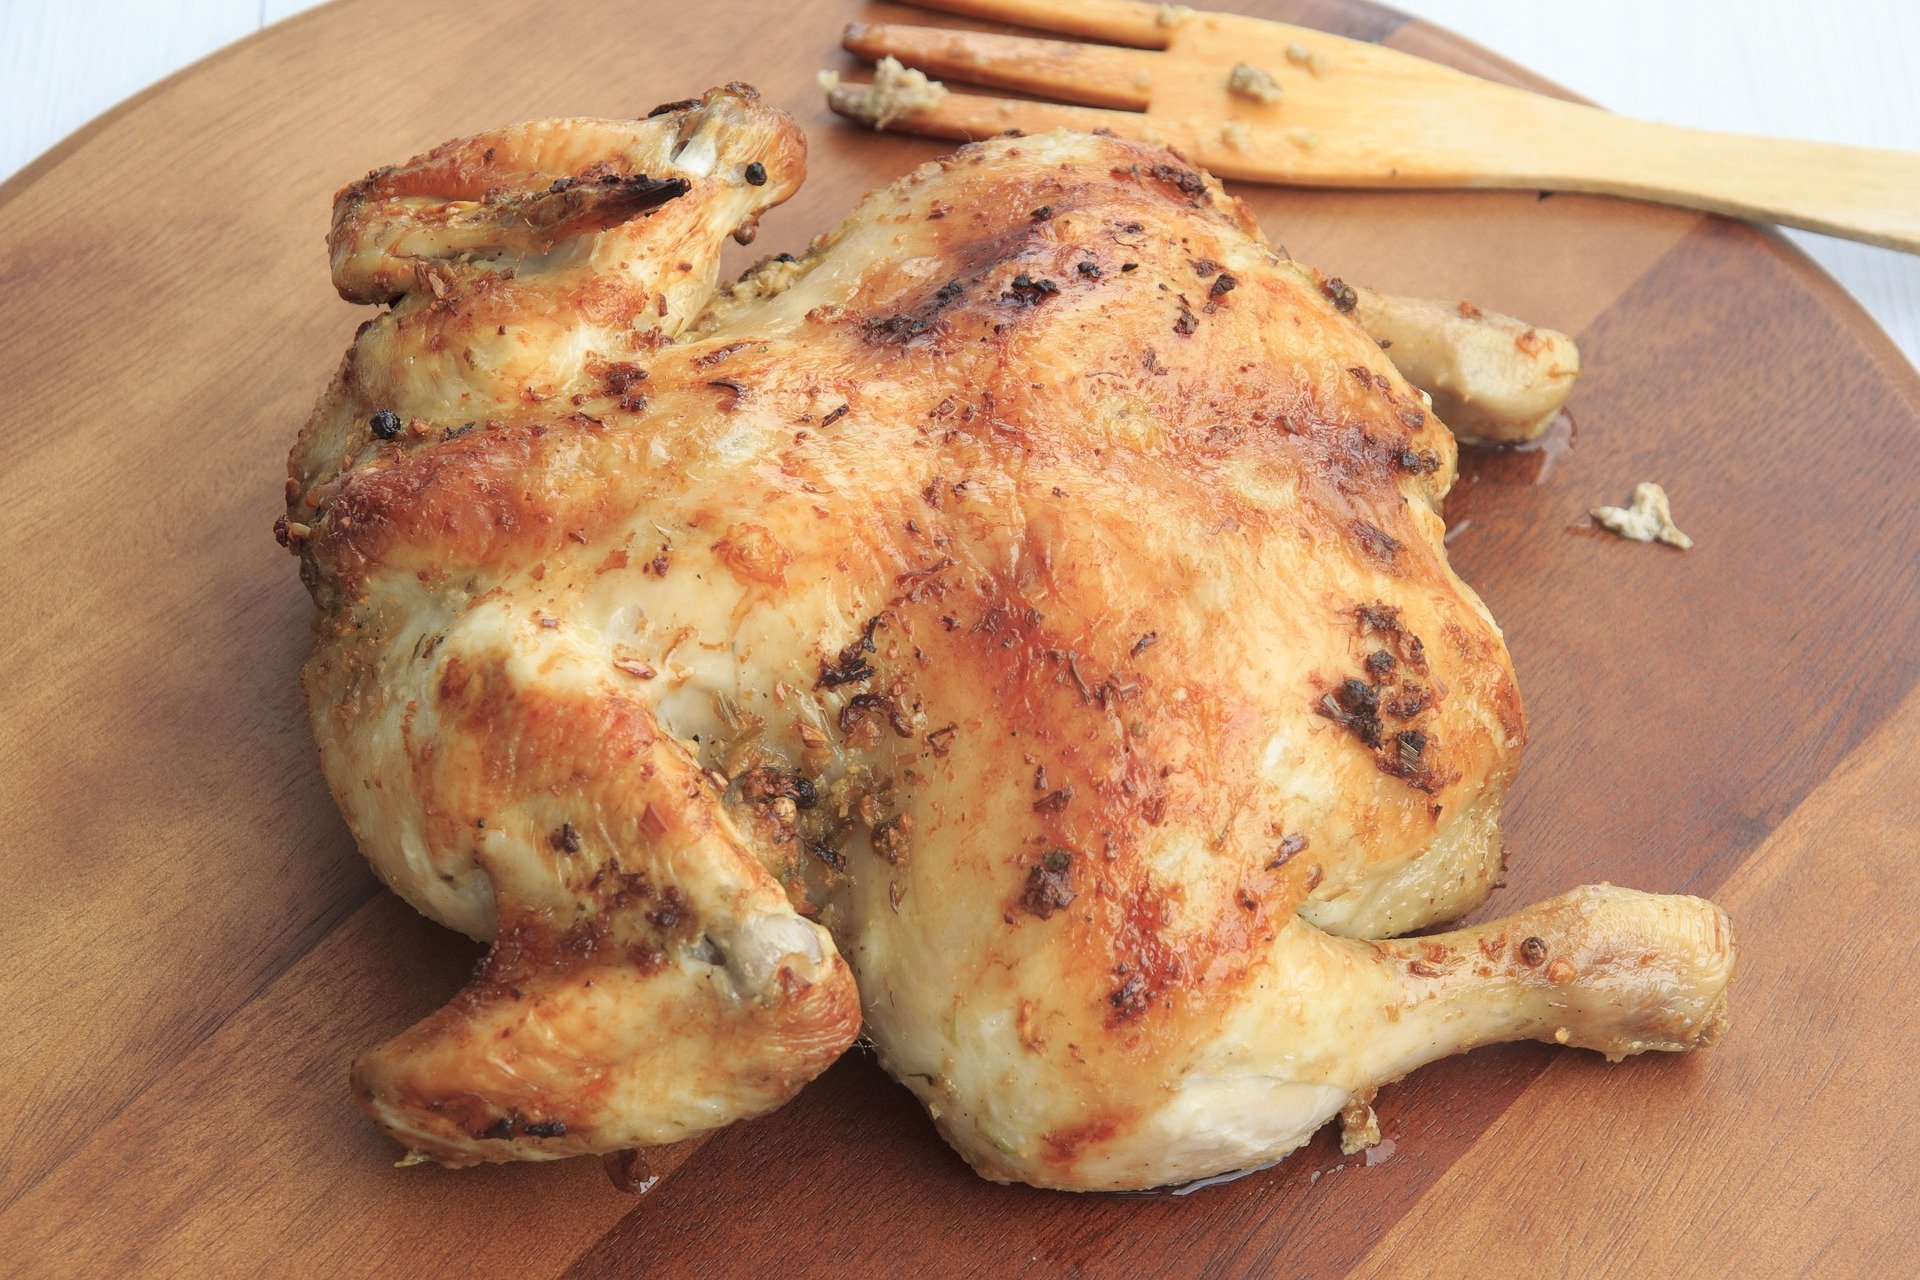 Roast chicken on a wooden board. | Source: Pixabay